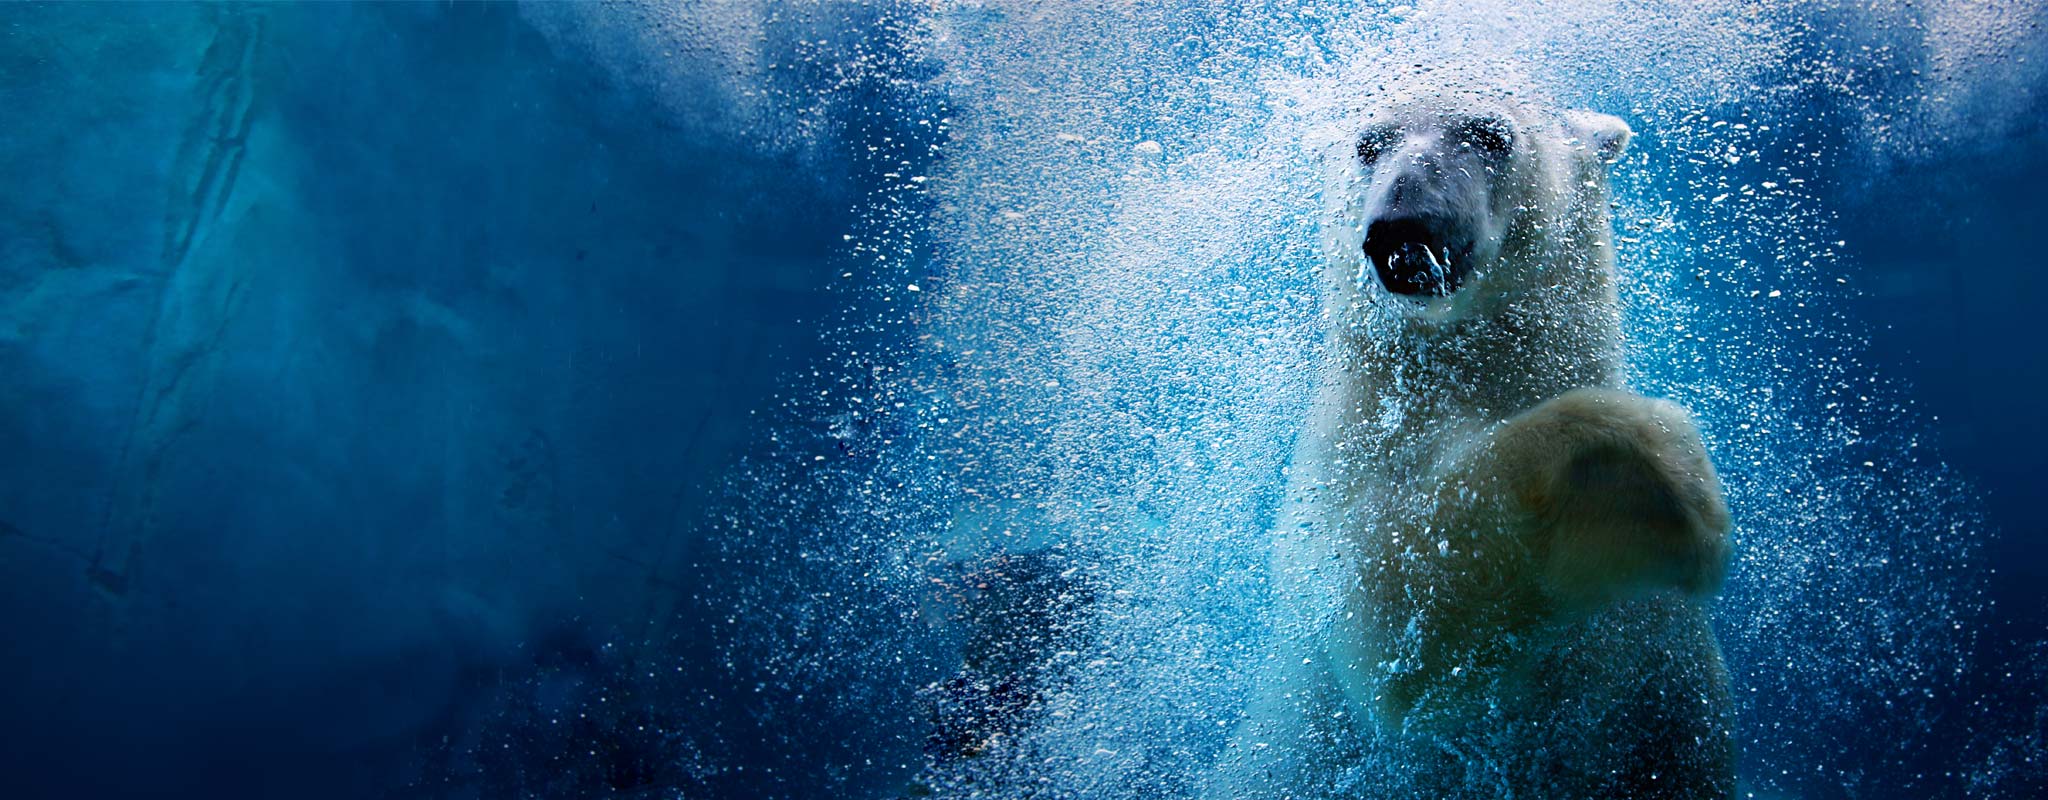 Nora the polar bear under the water at Utah’s Hogle Zoo